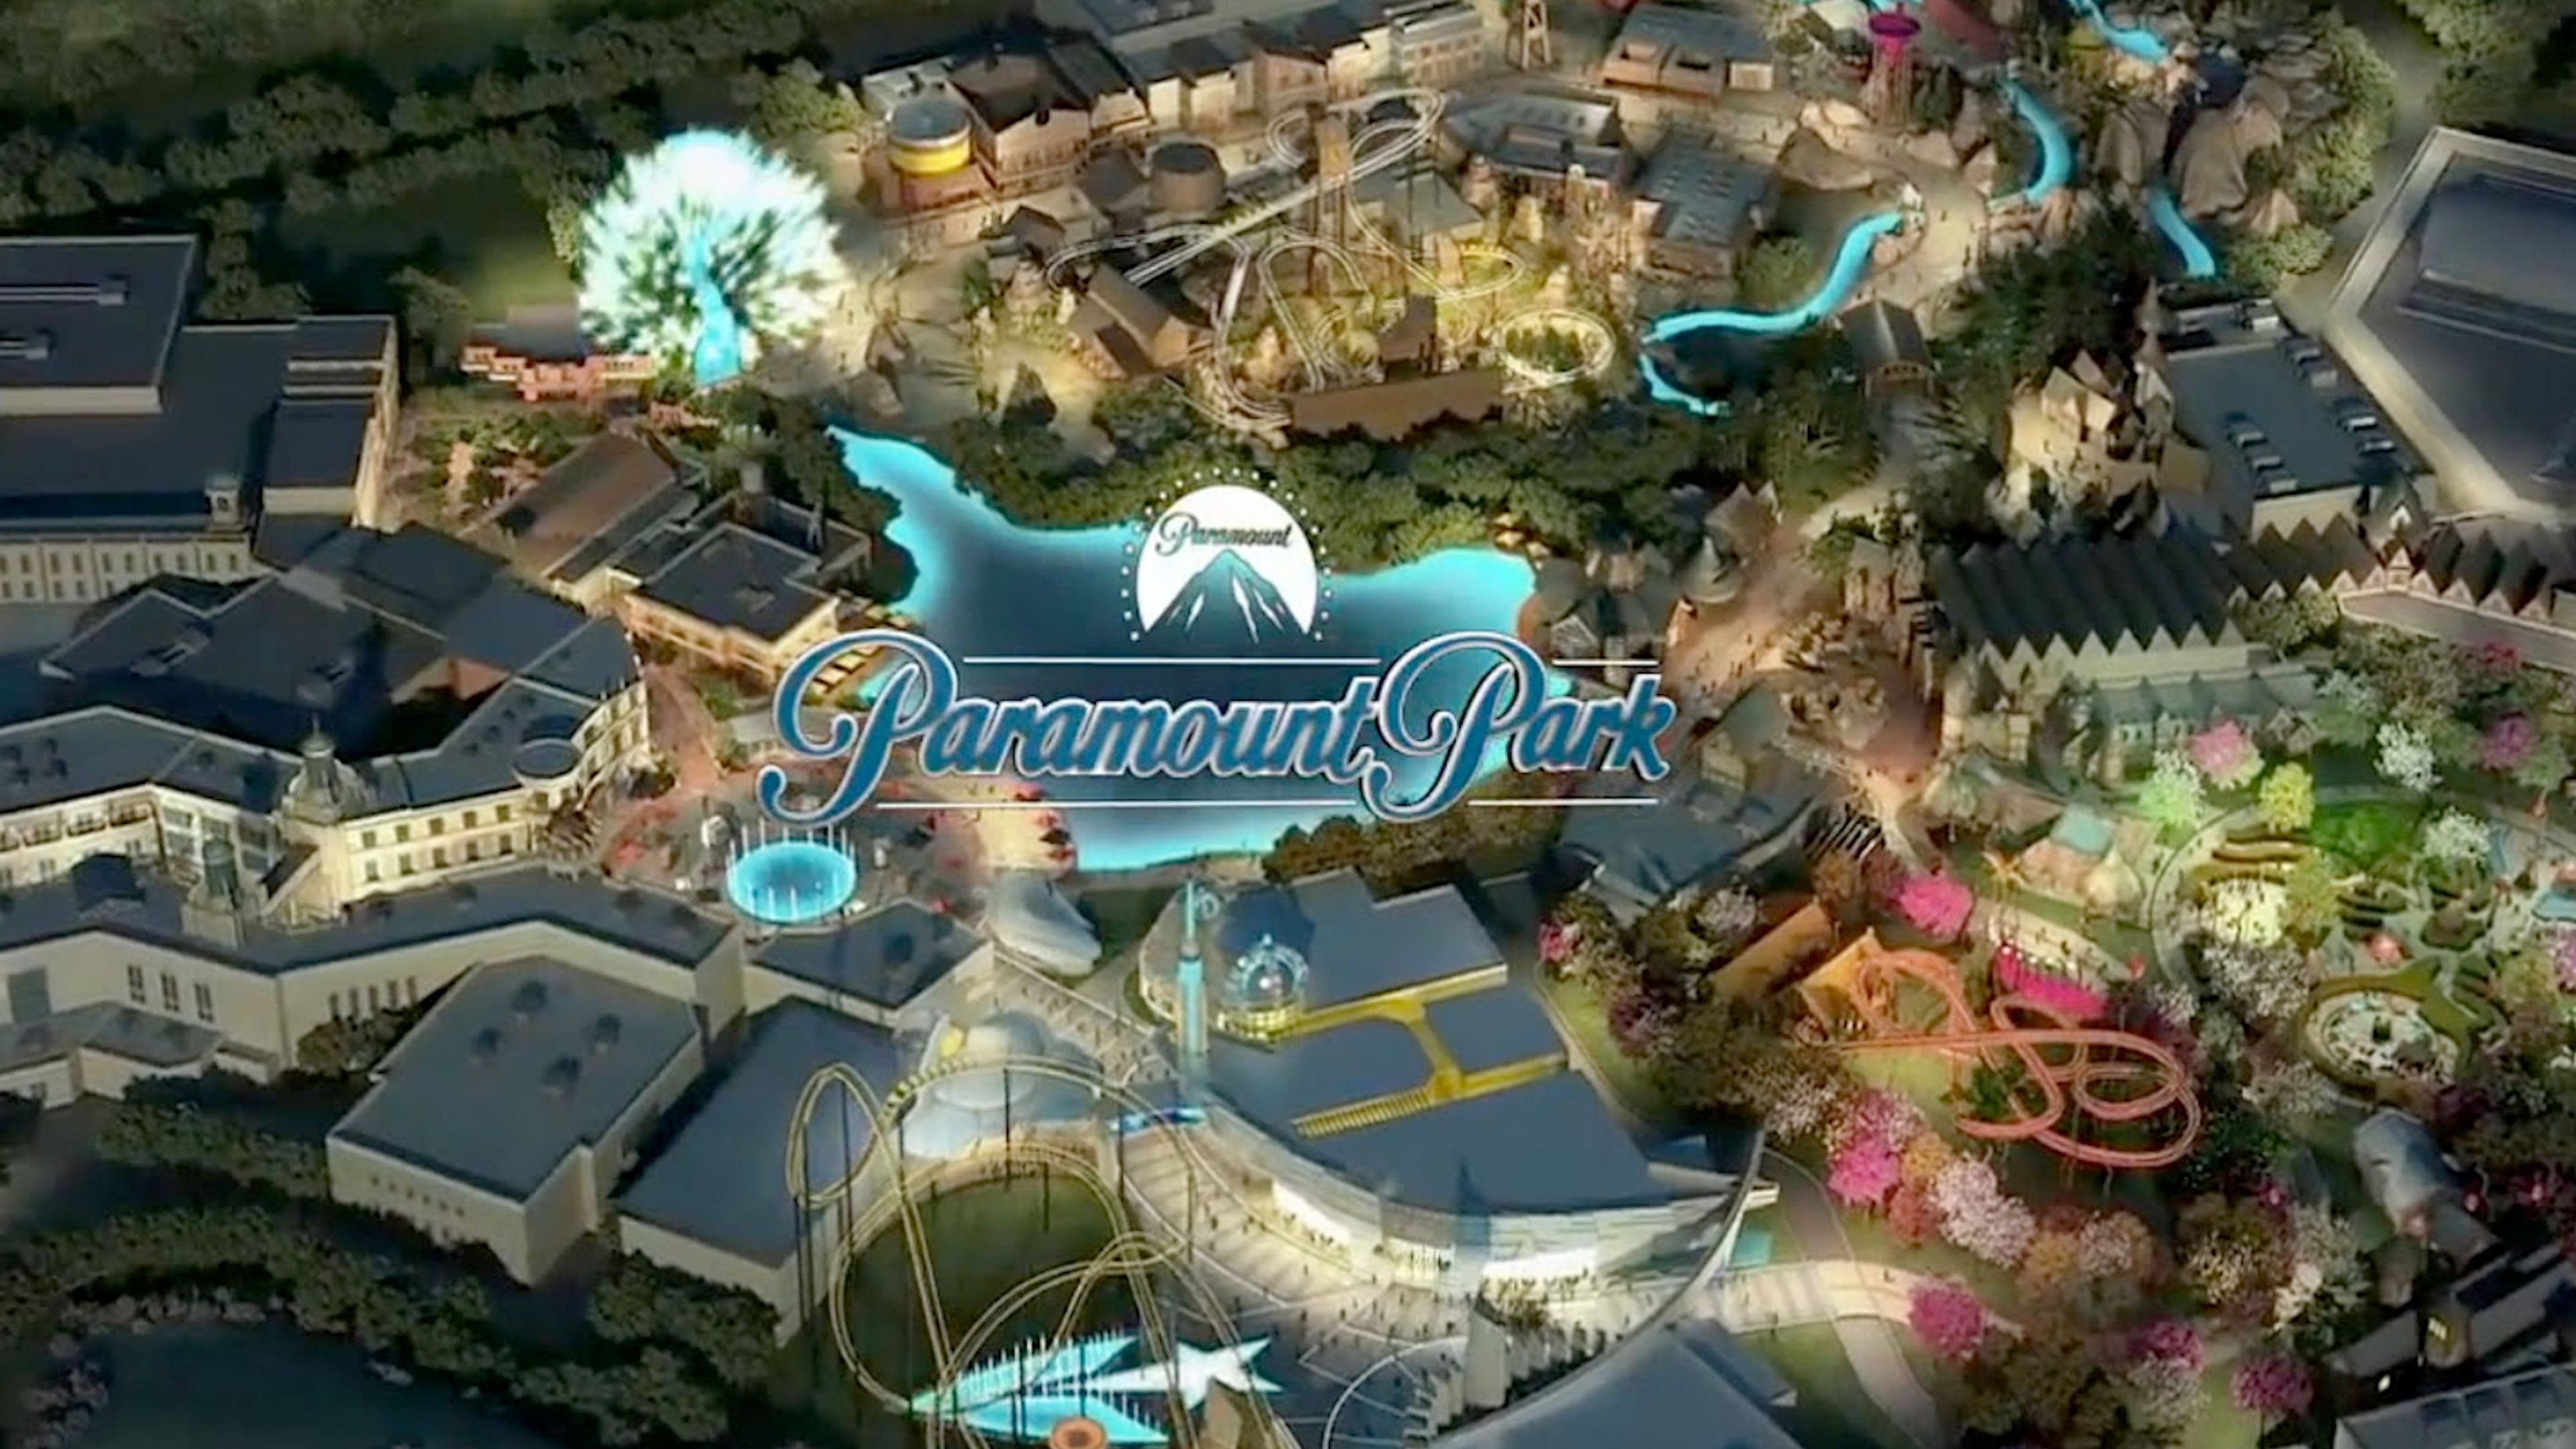 Paramount Park